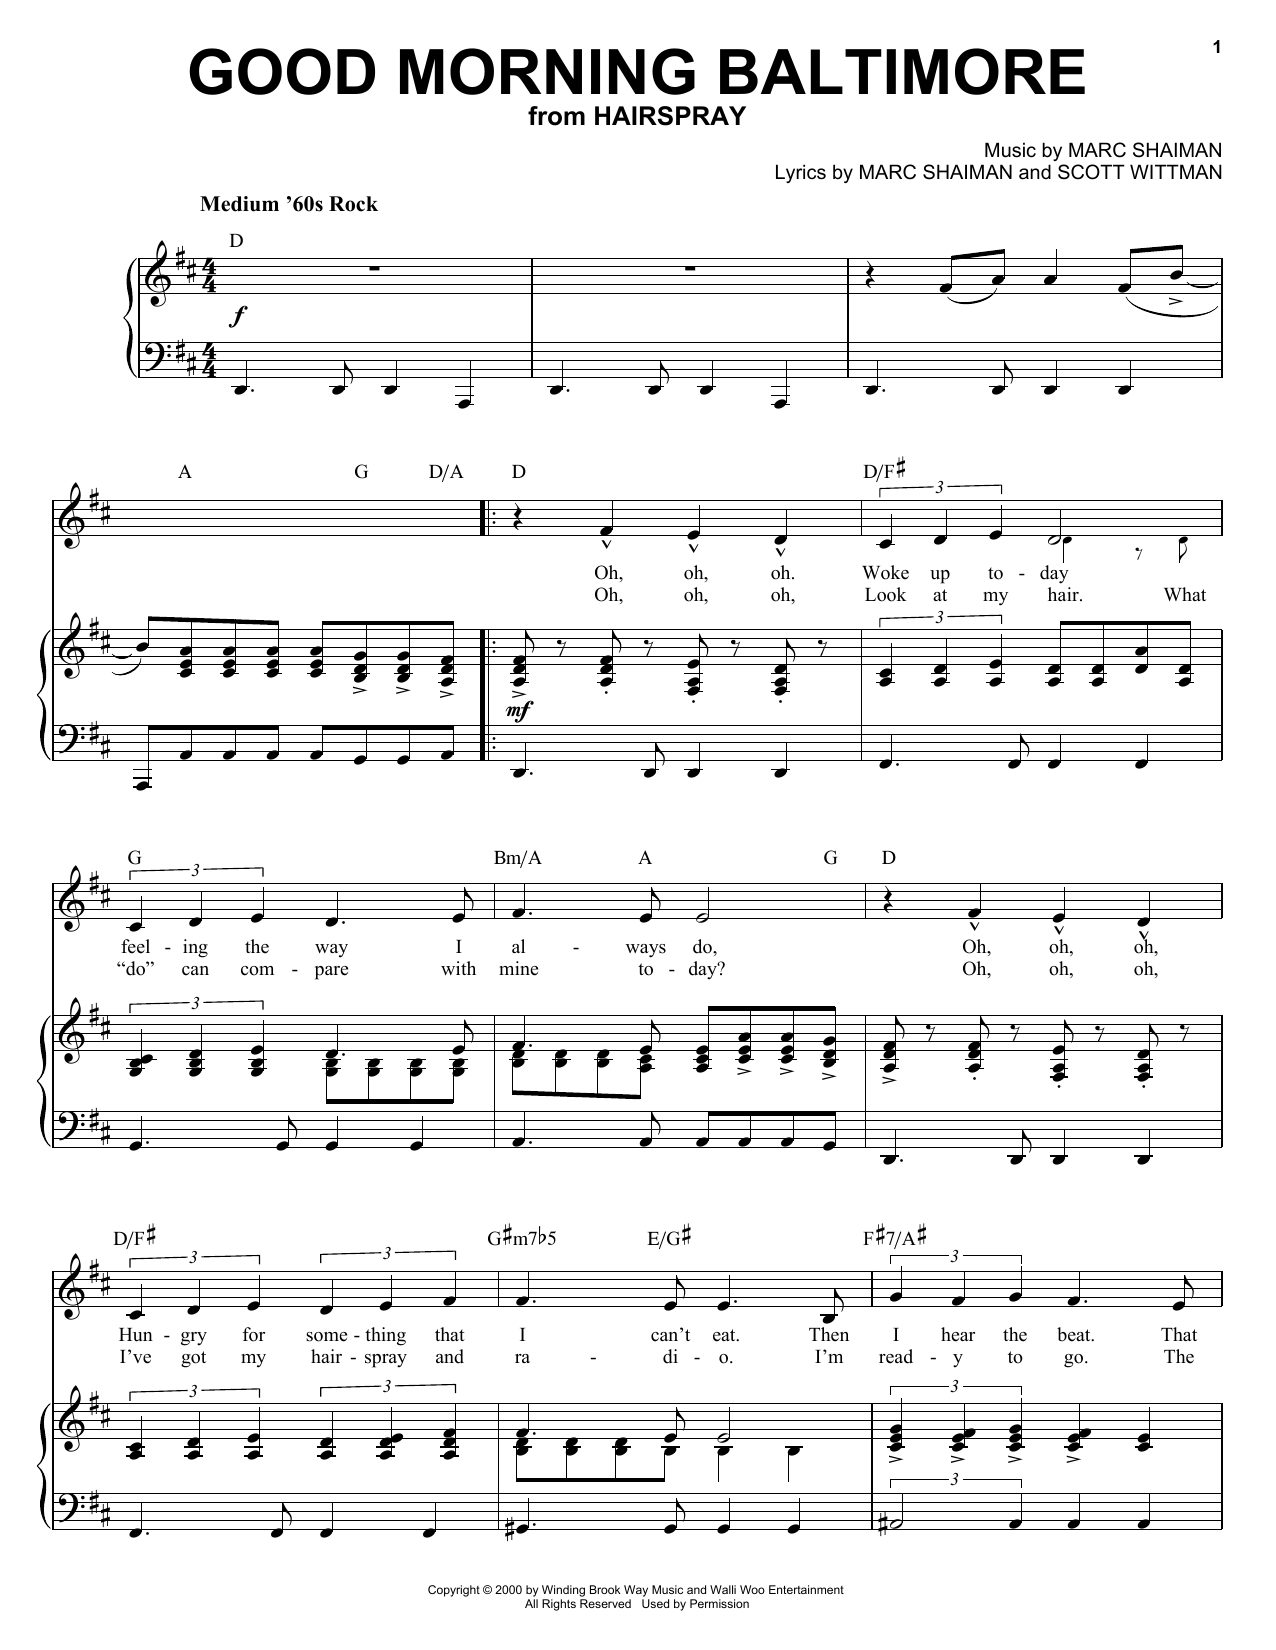 Marc Shaiman Good Morning Baltimore Sheet Music Notes & Chords for Voice - Download or Print PDF